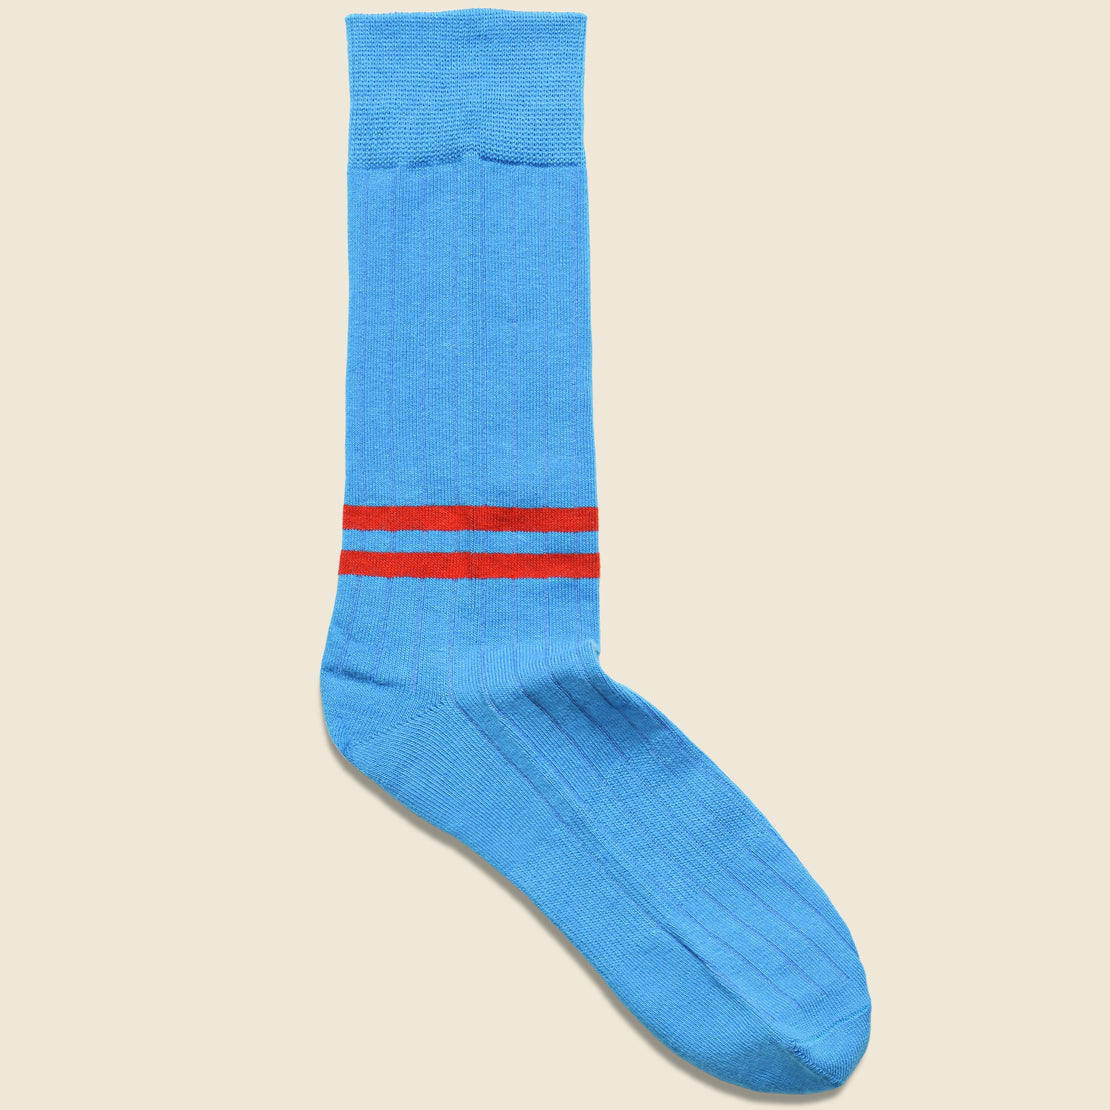 Richer Poorer Bixby Crew Sock - Blue/Red